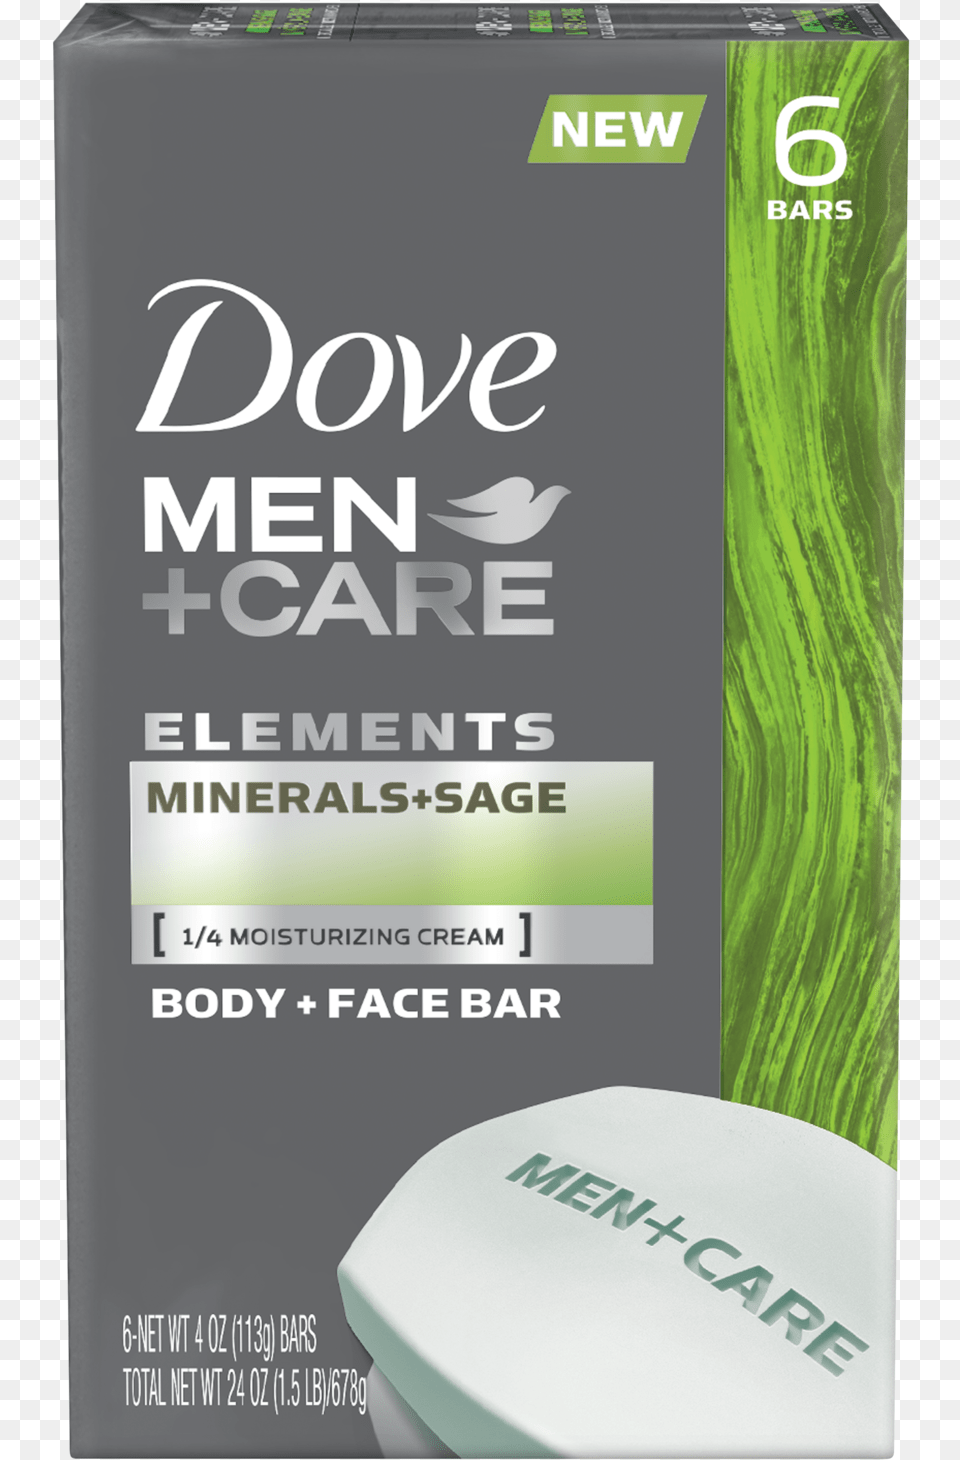 Dove Men Care Elements Minerals Sage Bar Oz Dove Men Care Elements Minerals Sage, Advertisement, Book, Publication, Poster Png Image